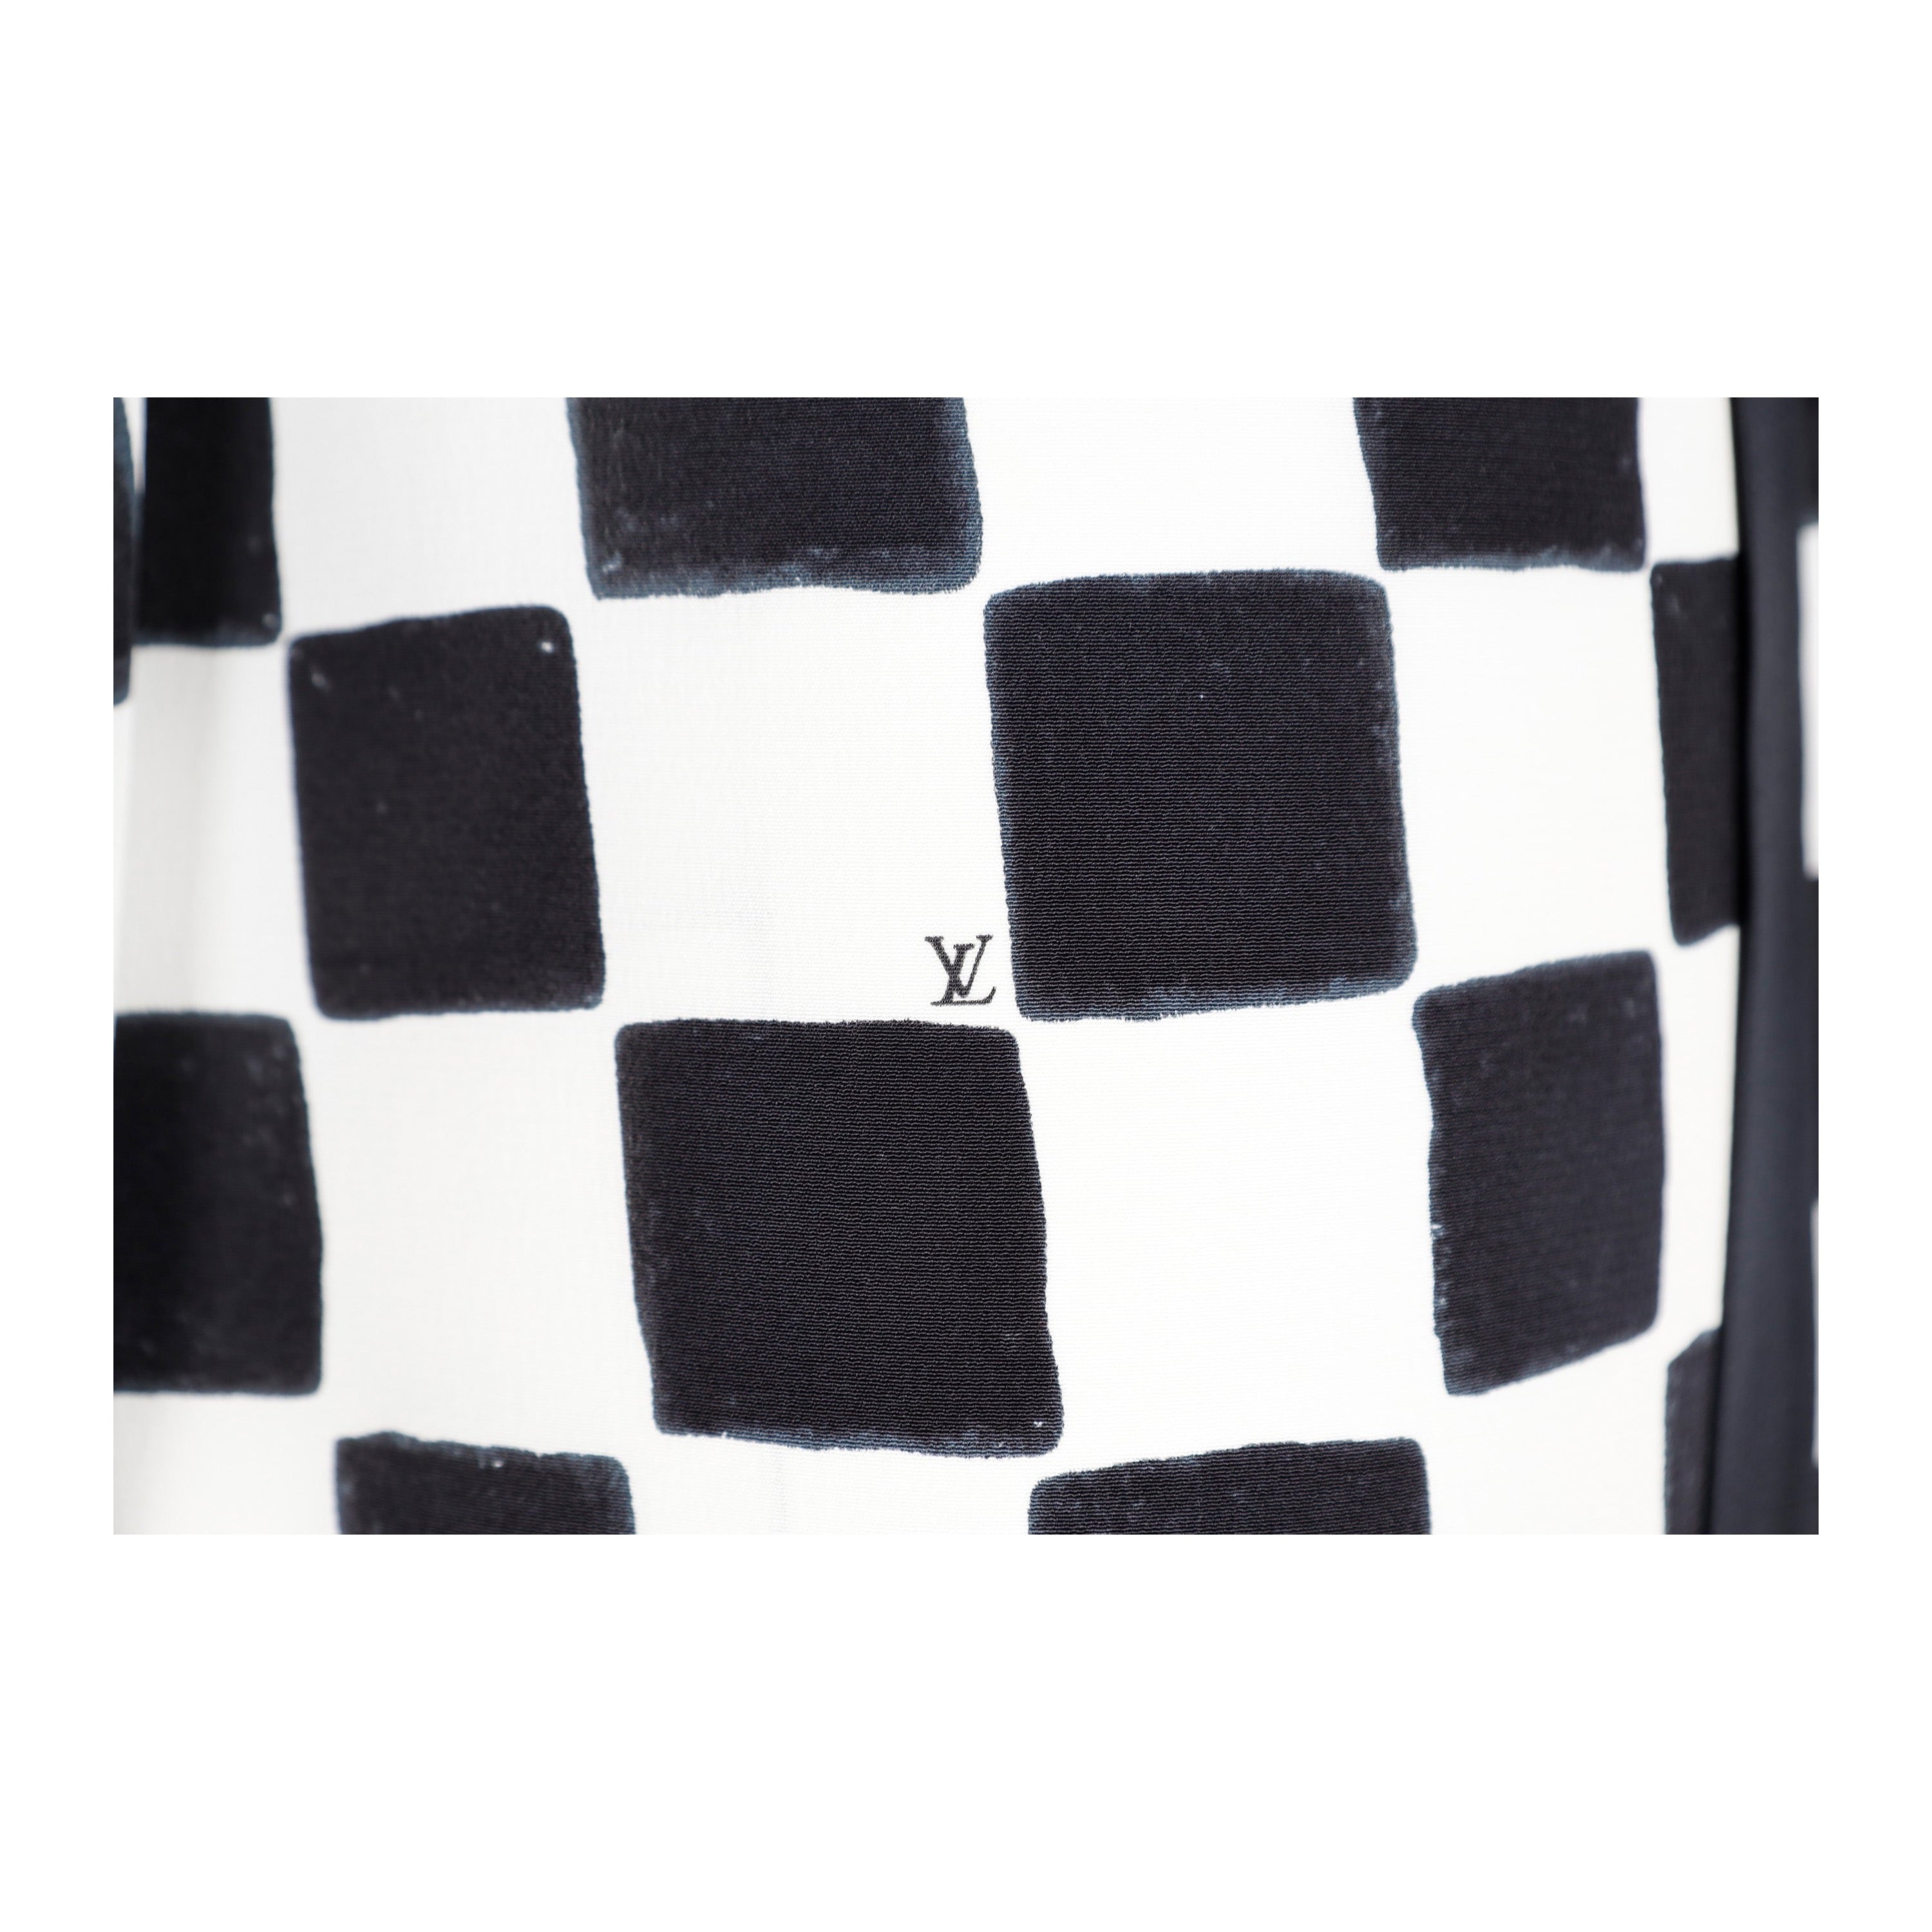 Louis Vuitton Checker and Polka Dots Dress Second-hand